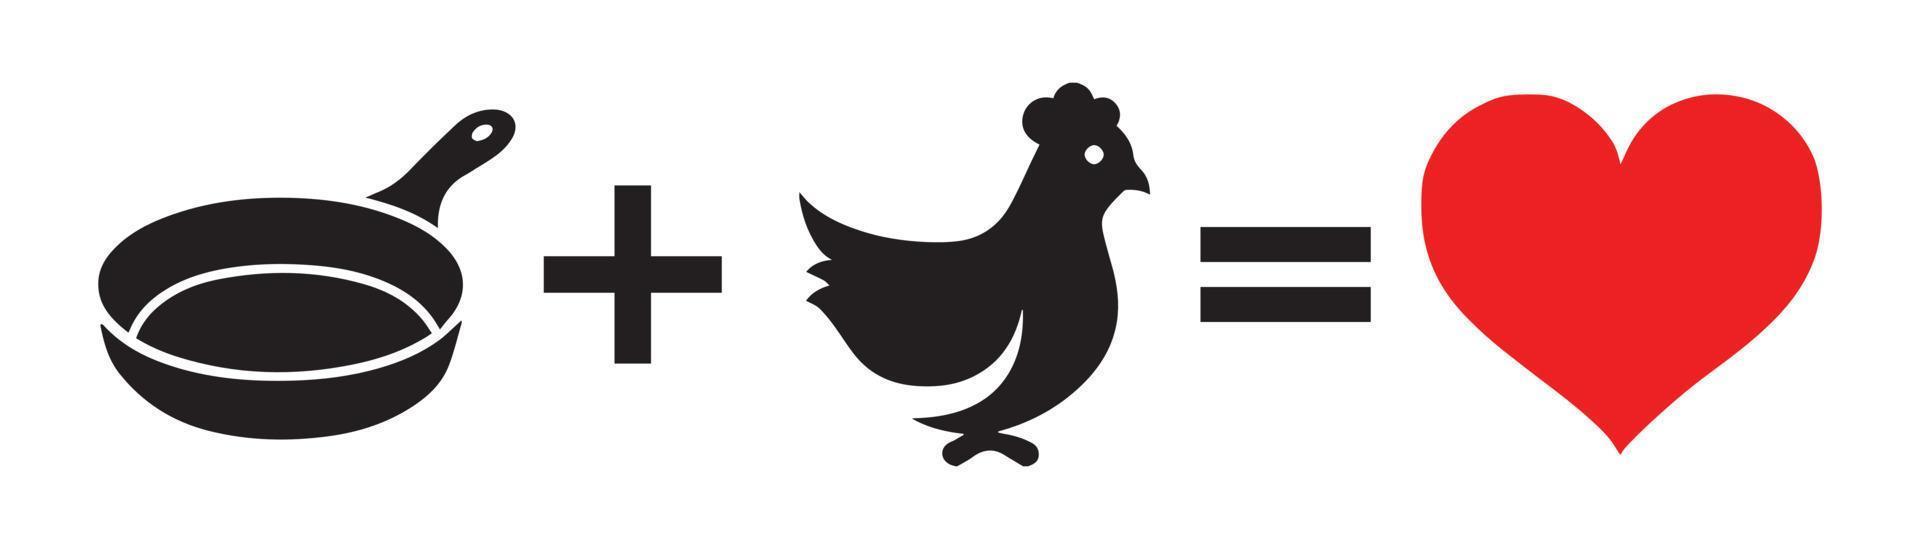 Pan, Chicken, Love. I love chicken design. I love Chicken dinner vector